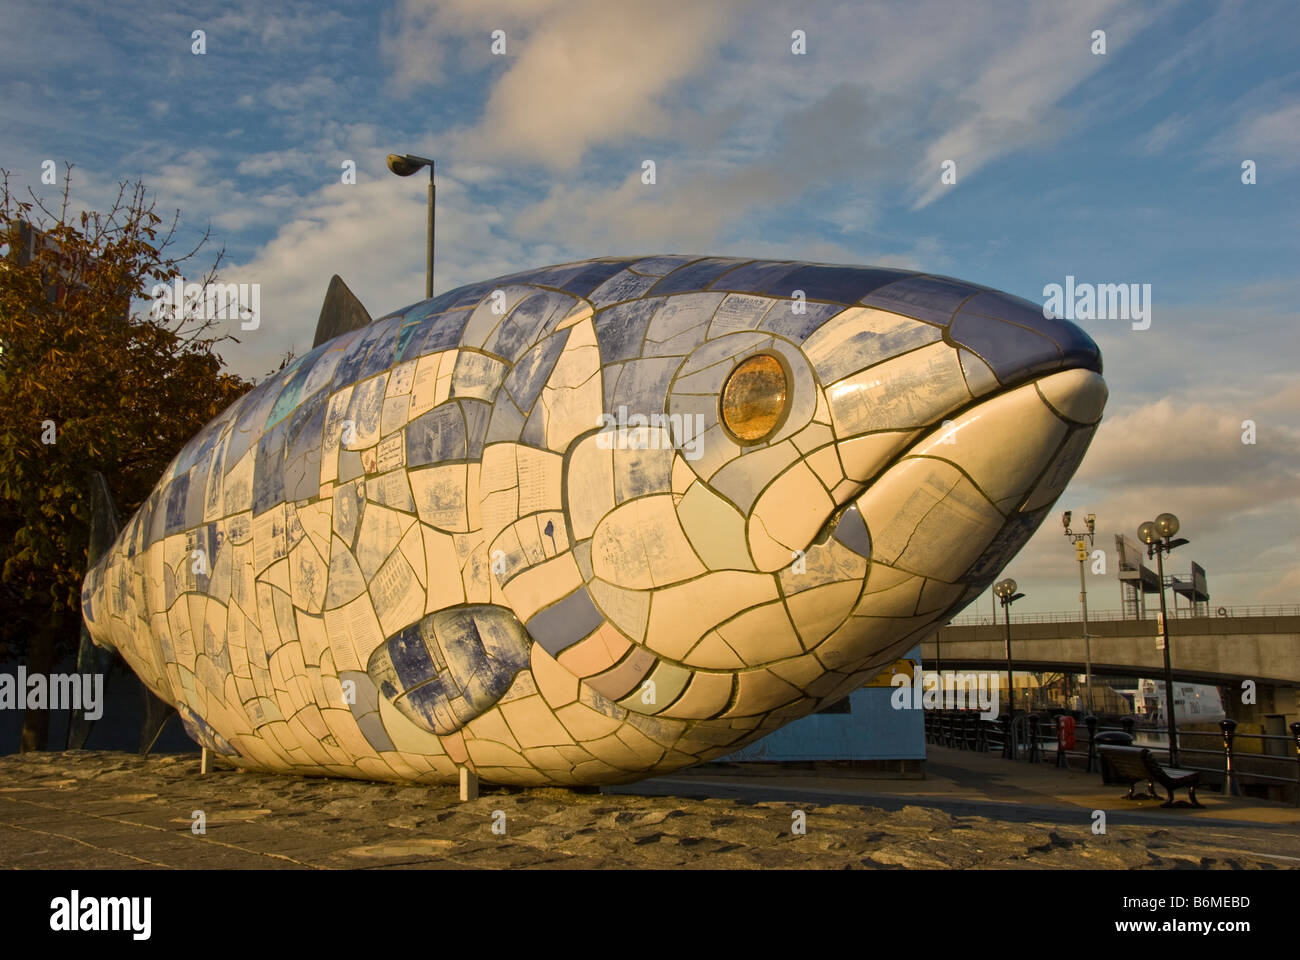 Belfast gros poisson sculpture art public attraction touristique populaire d'Irlande Waterfront lagan weir Laganside Banque D'Images